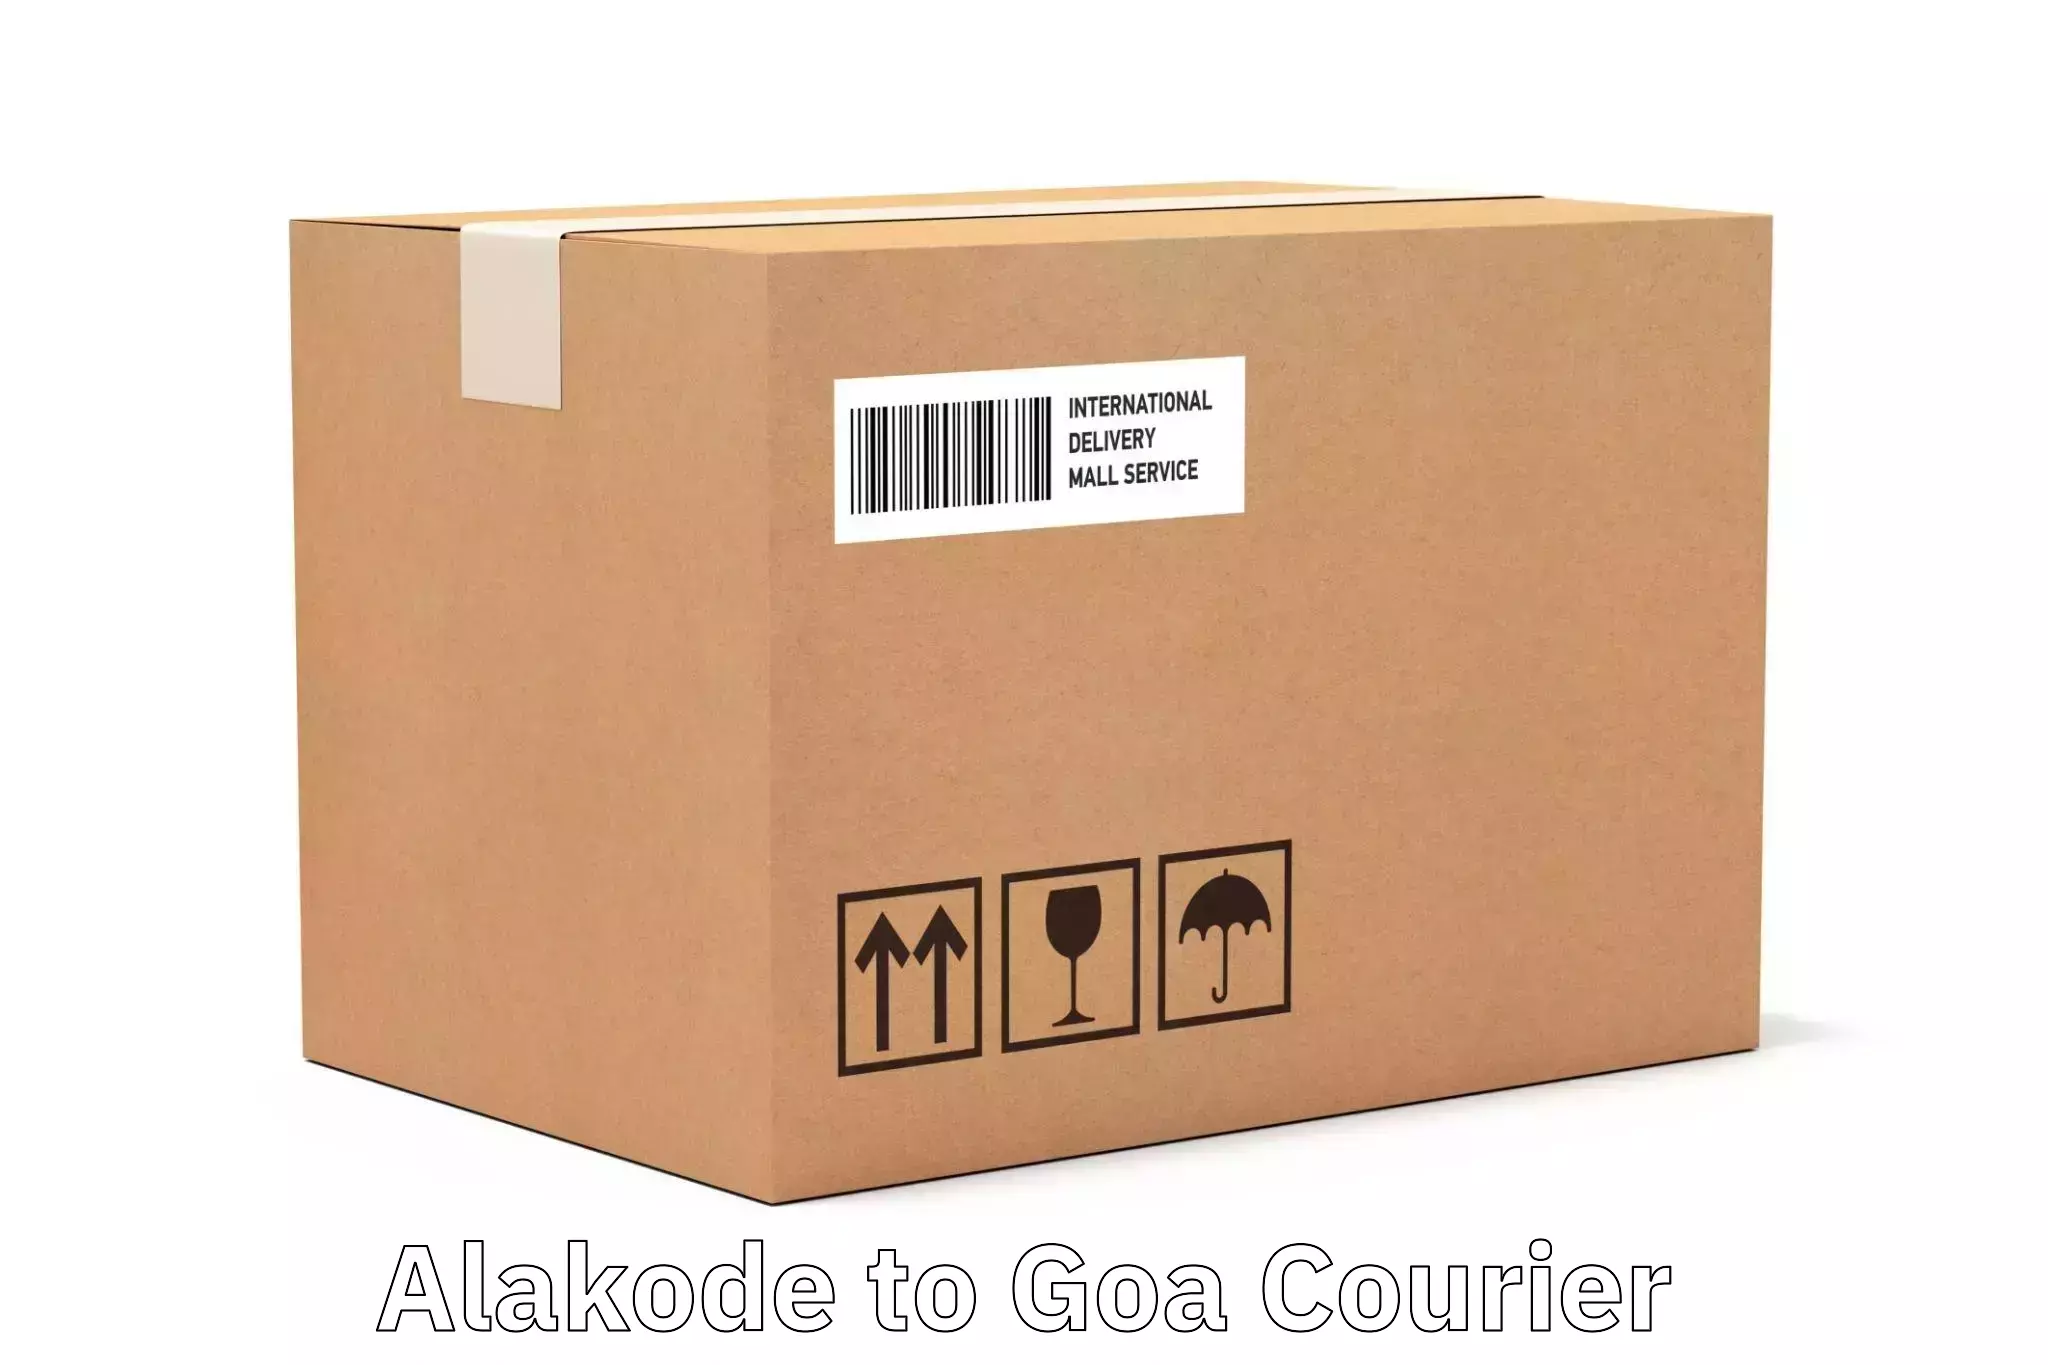 Enhanced tracking features Alakode to South Goa